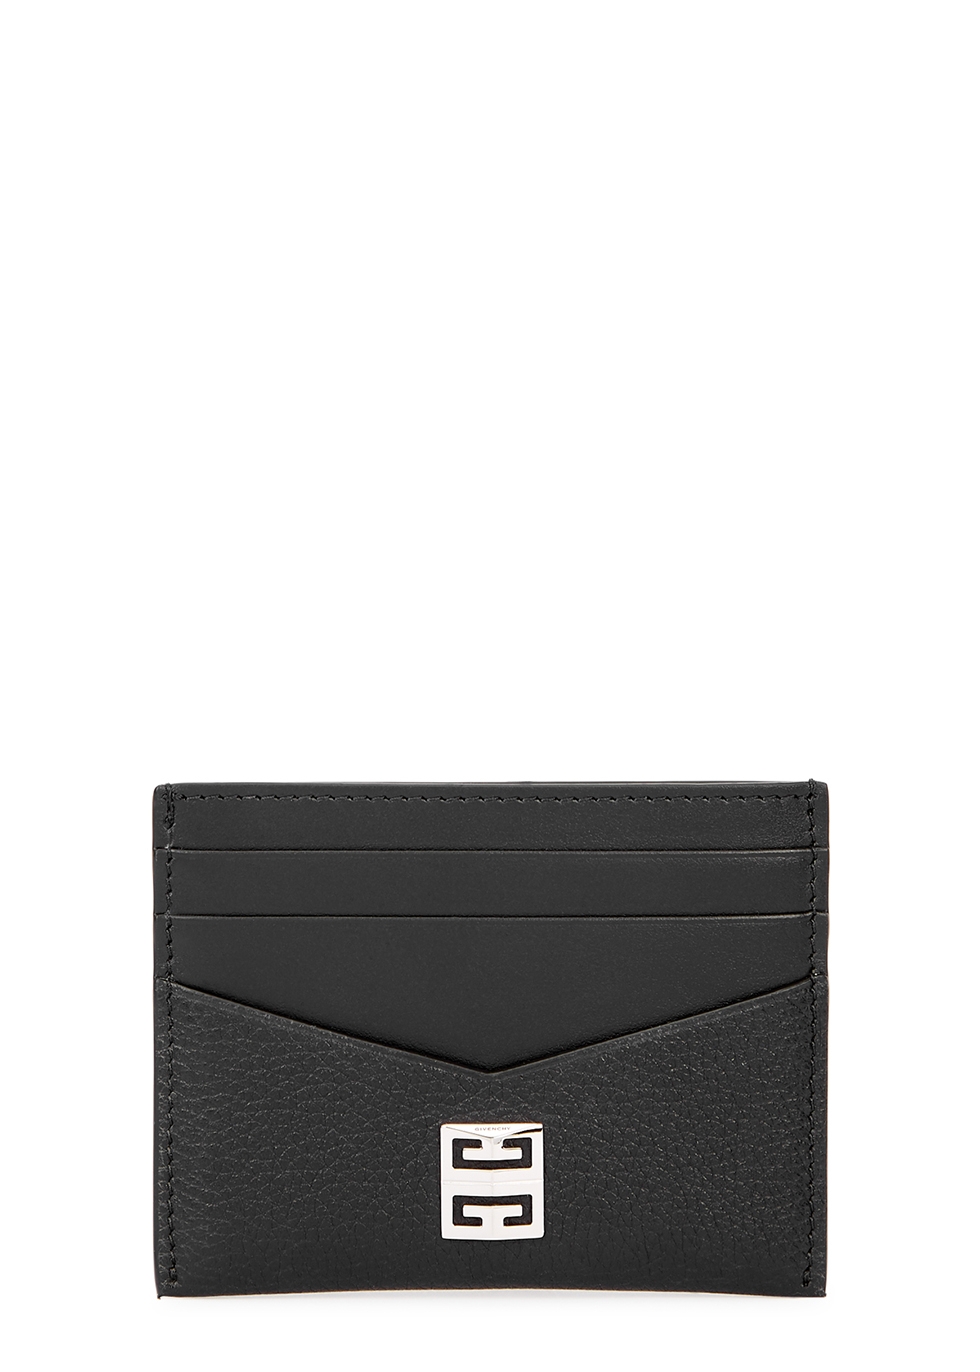 Givenchy Black logo leather card holder - Harvey Nichols